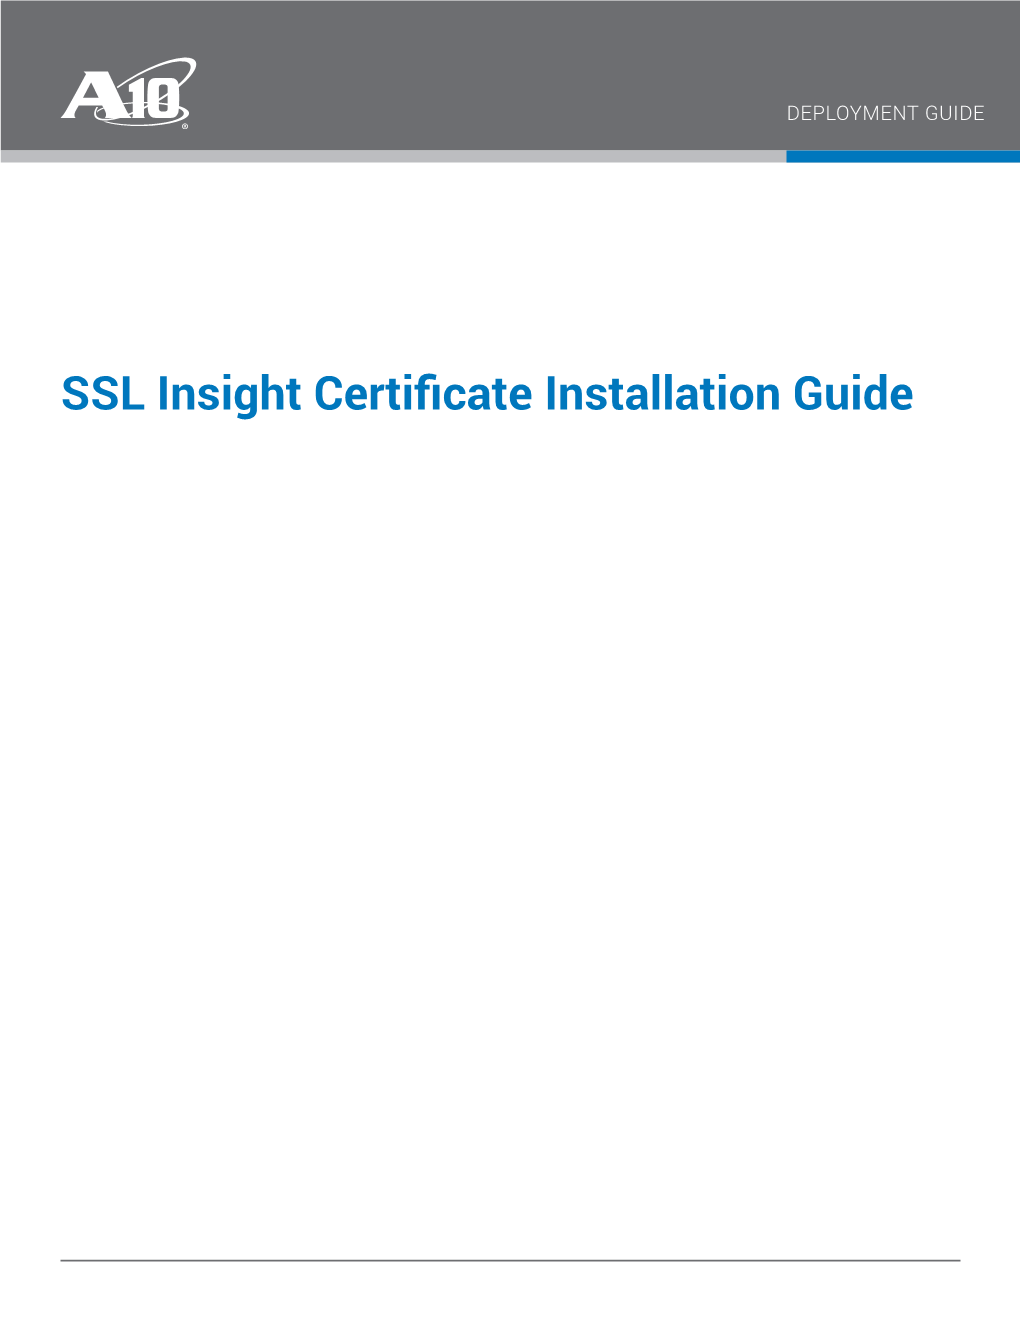 SSL Insight Certificate Installation Guide Deployment Guide | SSL Insight Certificate Installation Guide